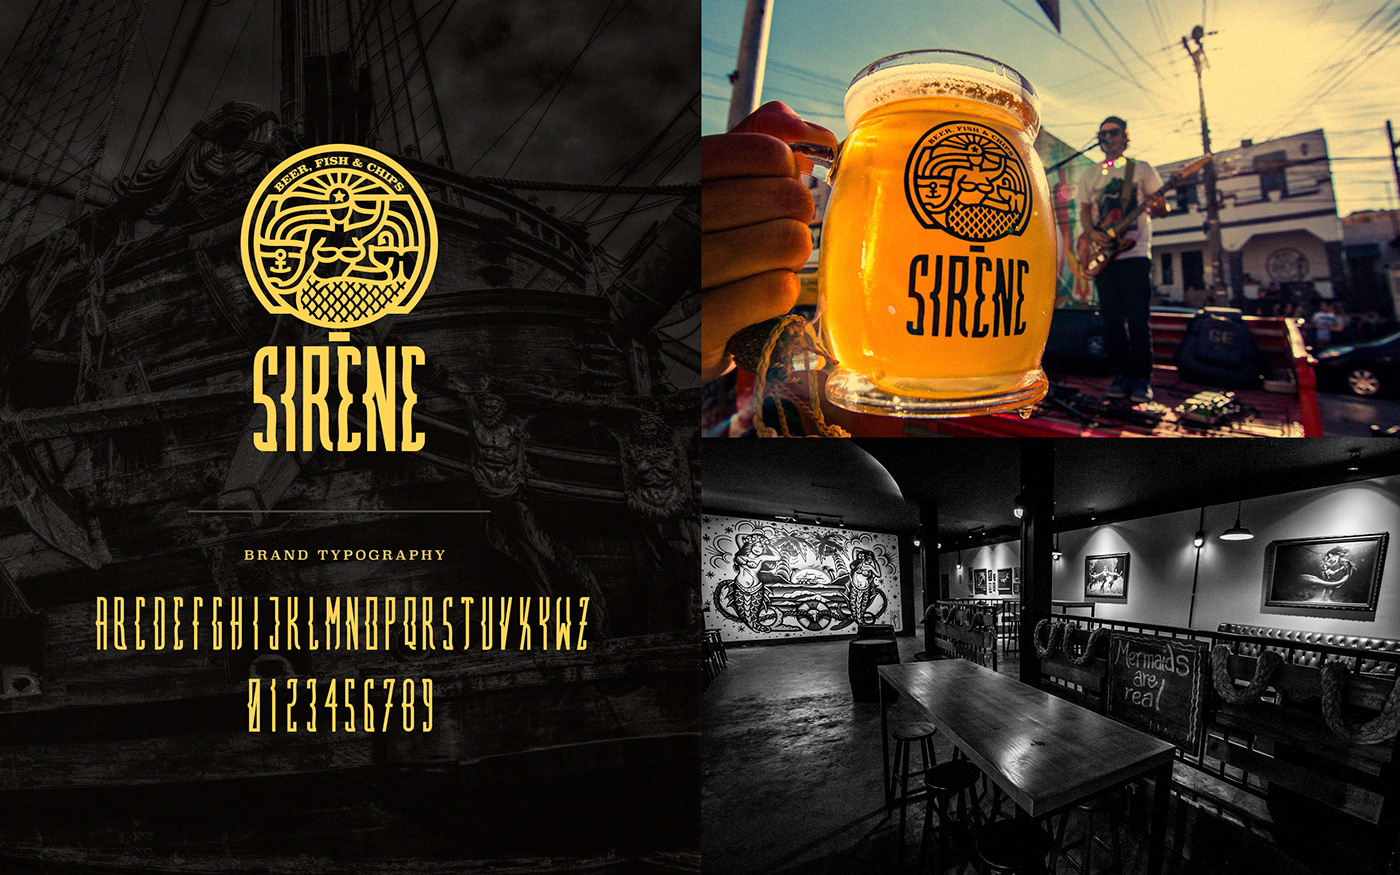 pub pirate sereia sirene mermaid sea bar old gold and black wood type belgian england